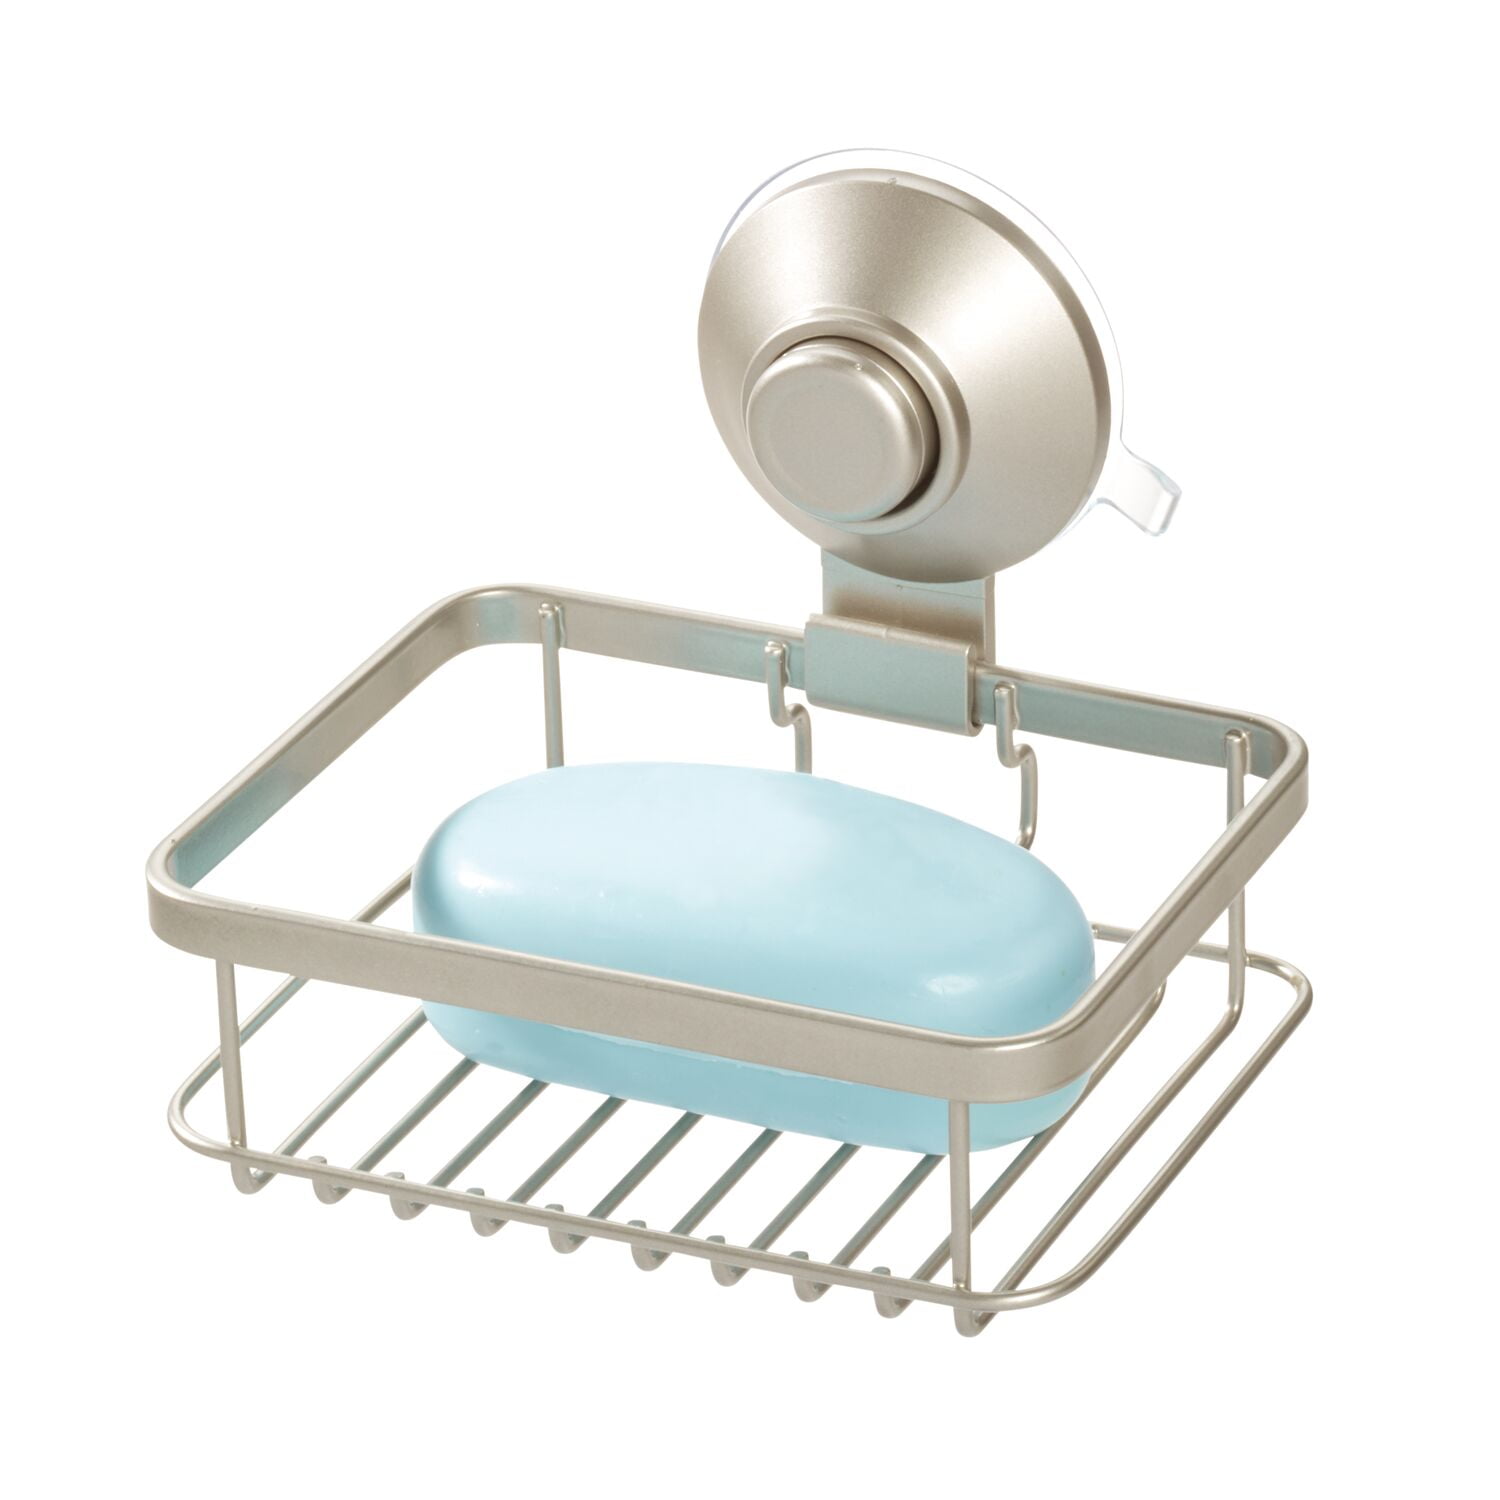 Idesign Rain Power Lock Bathroom Suction Soap Dish And Toothbrush/Razor Holder